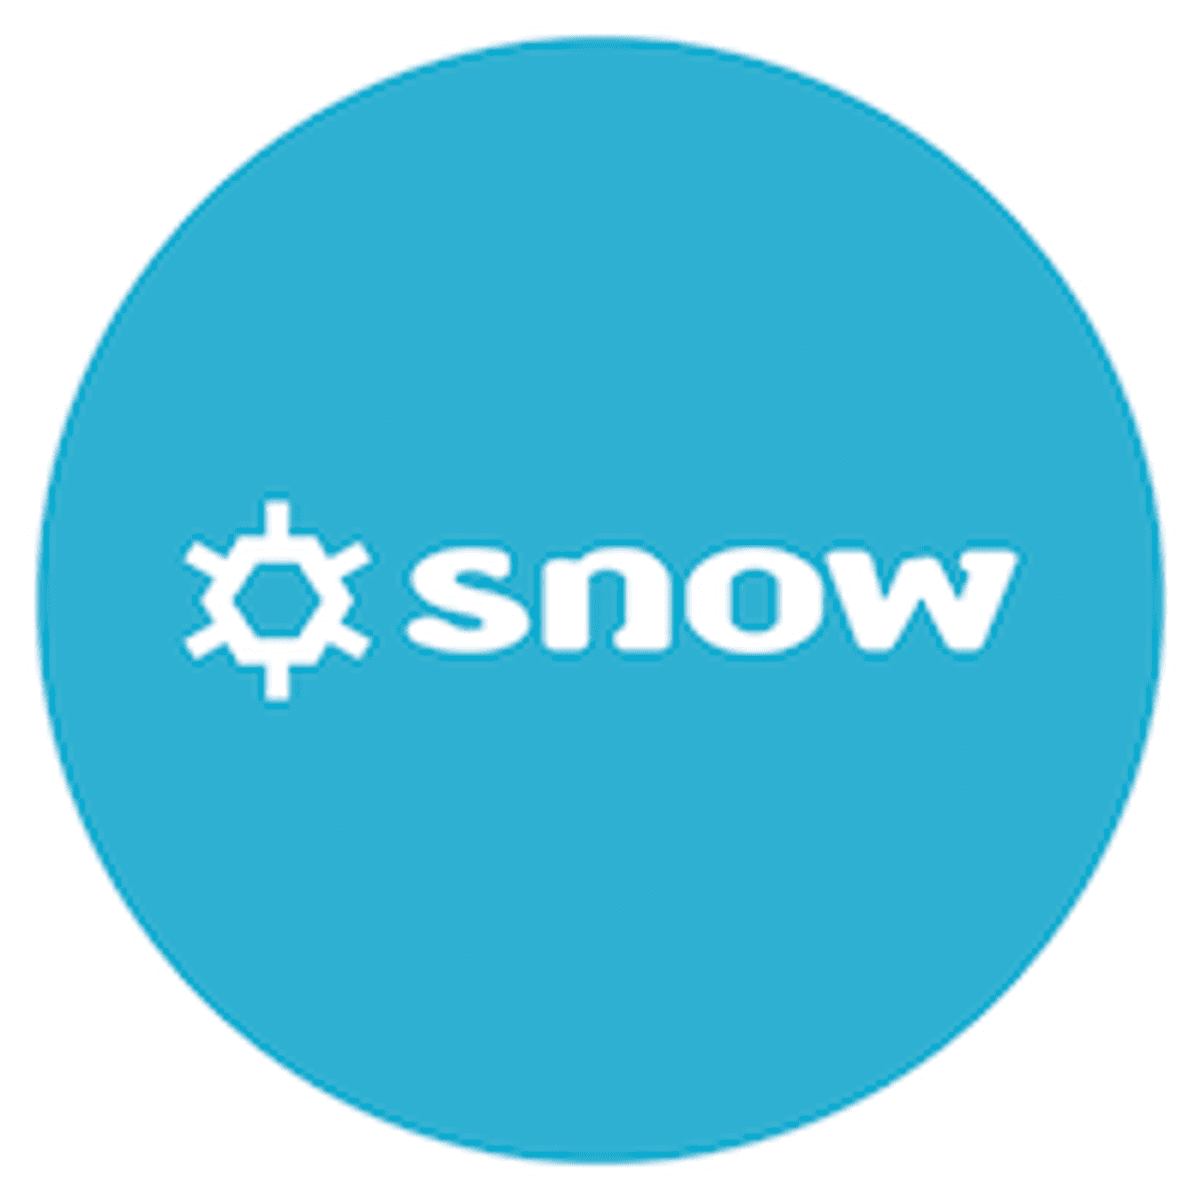 Snow Software koopt Embotics image